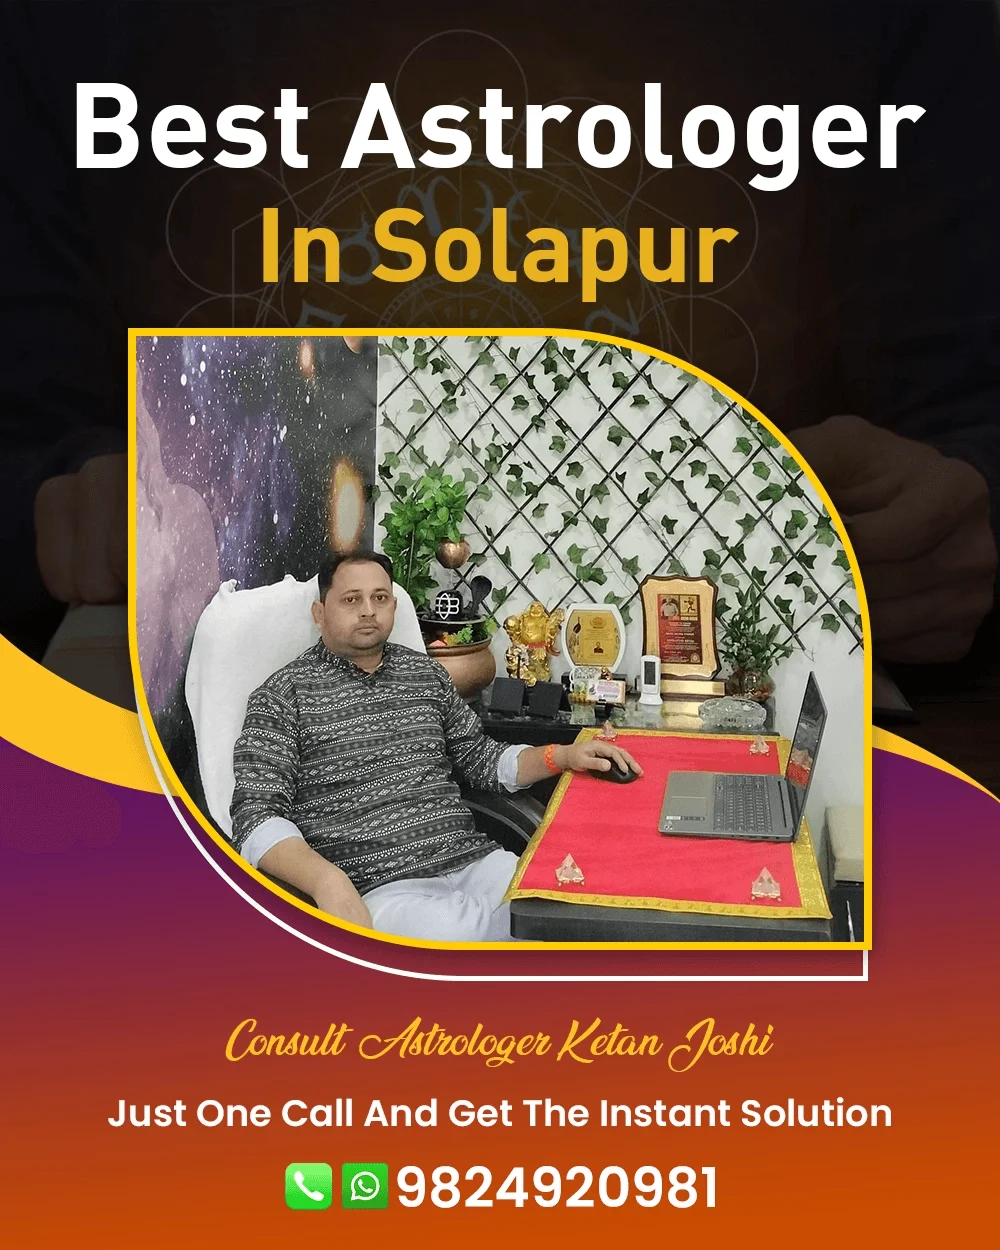 Best Astrologer In Solapur